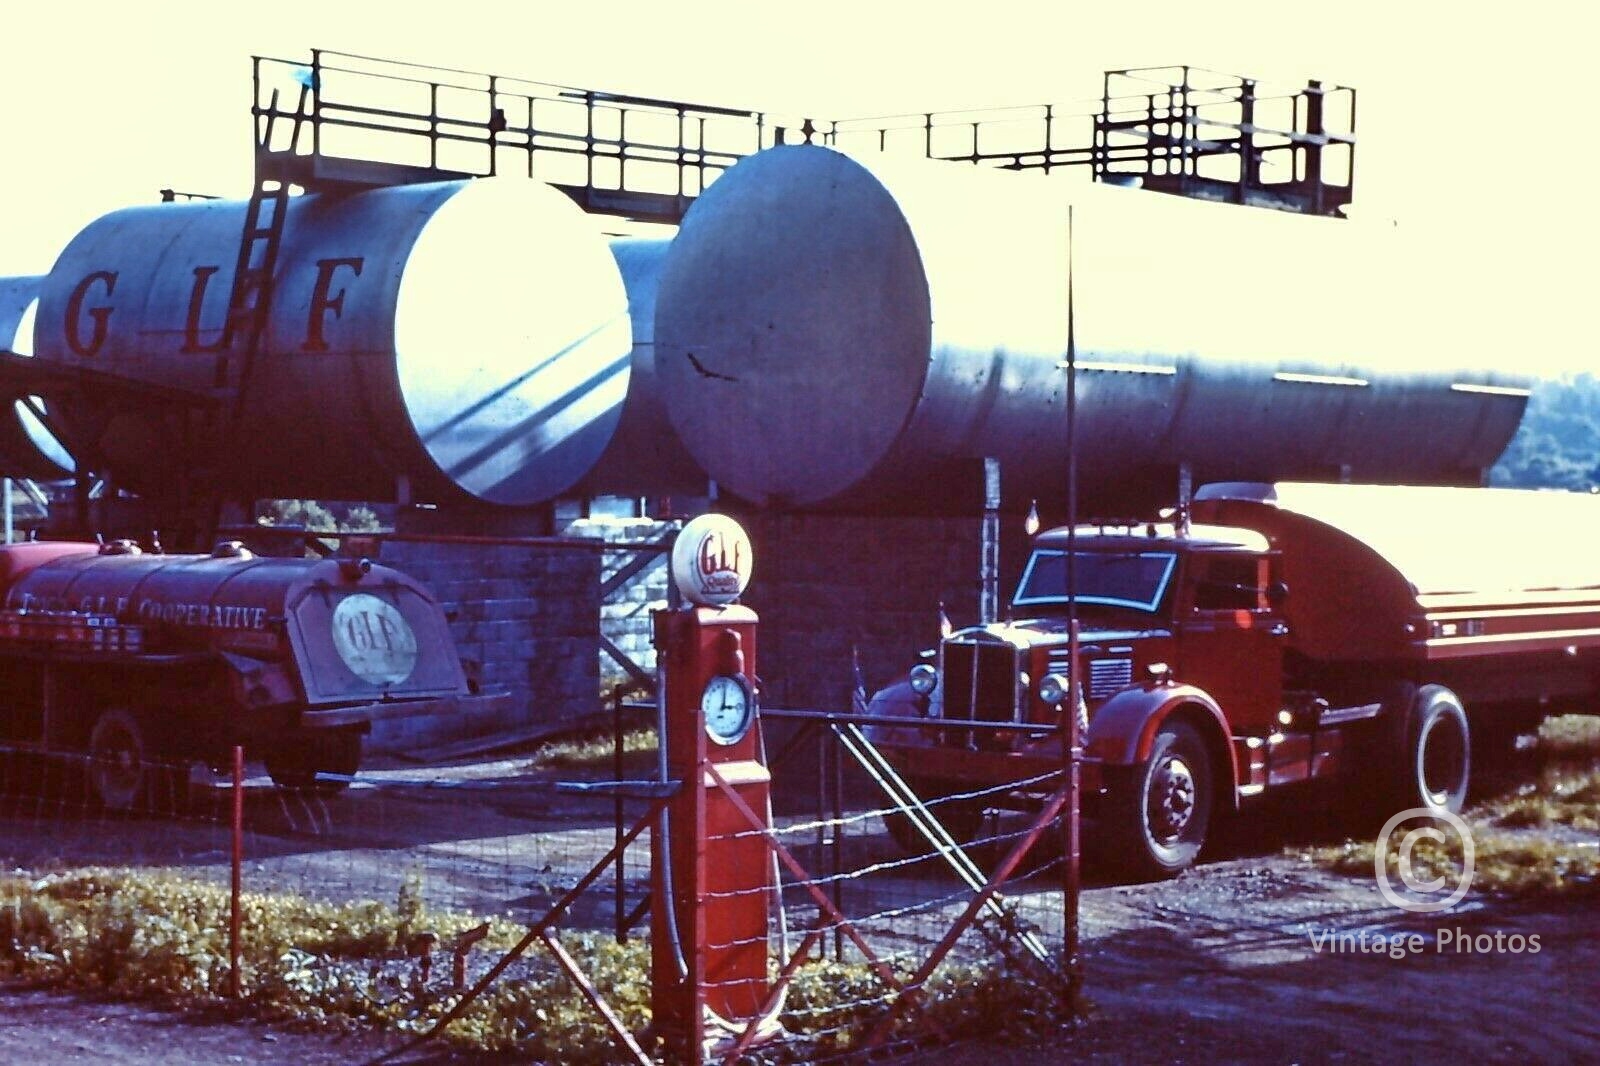 1950s GLF Fuel Station